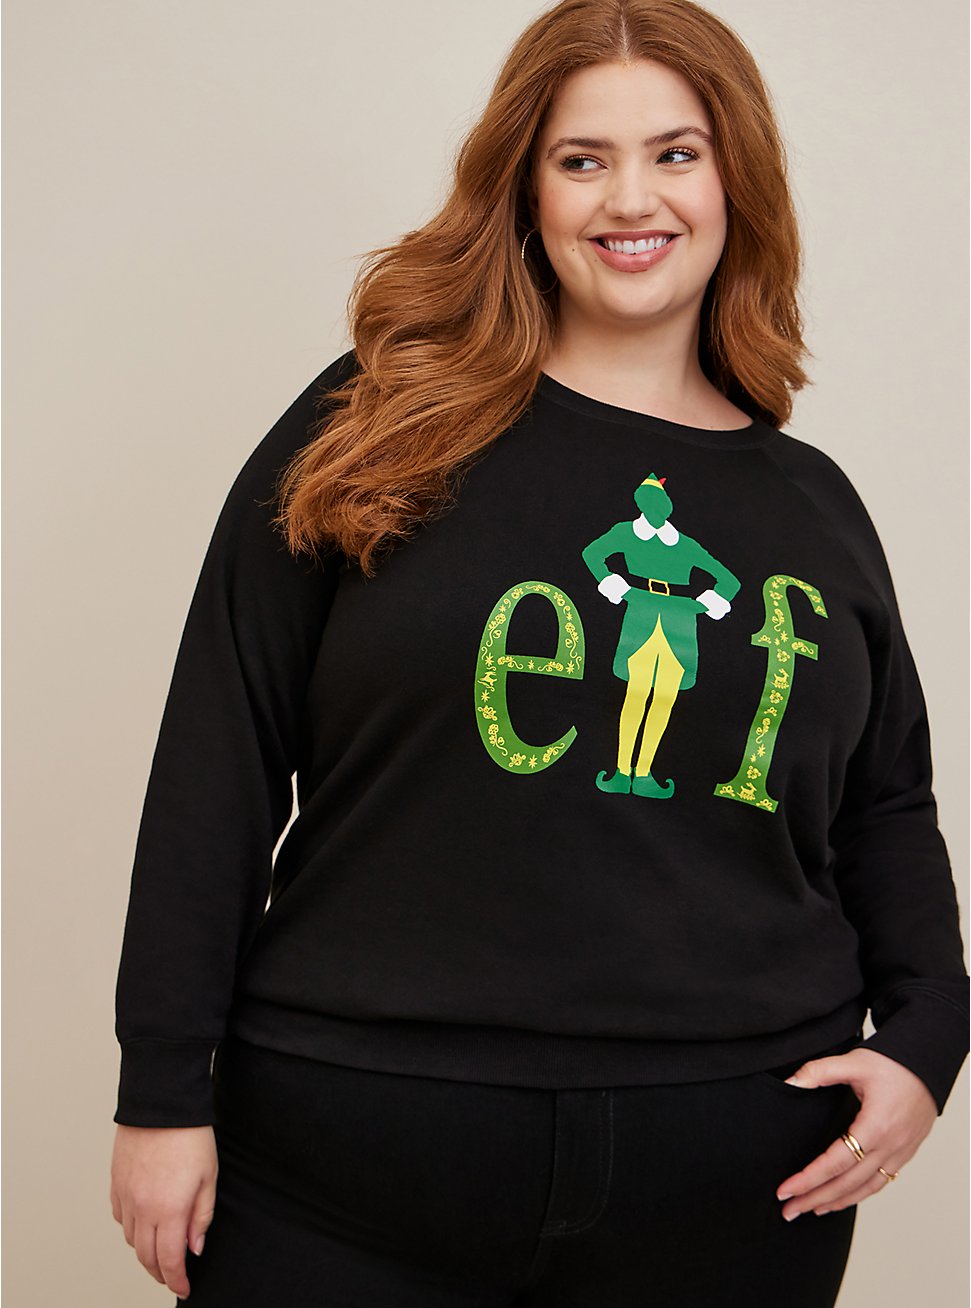 Warner Bros. Elf Cozy Fleece Crew Neck Sweatshirt, DEEP BLACK, hi-res